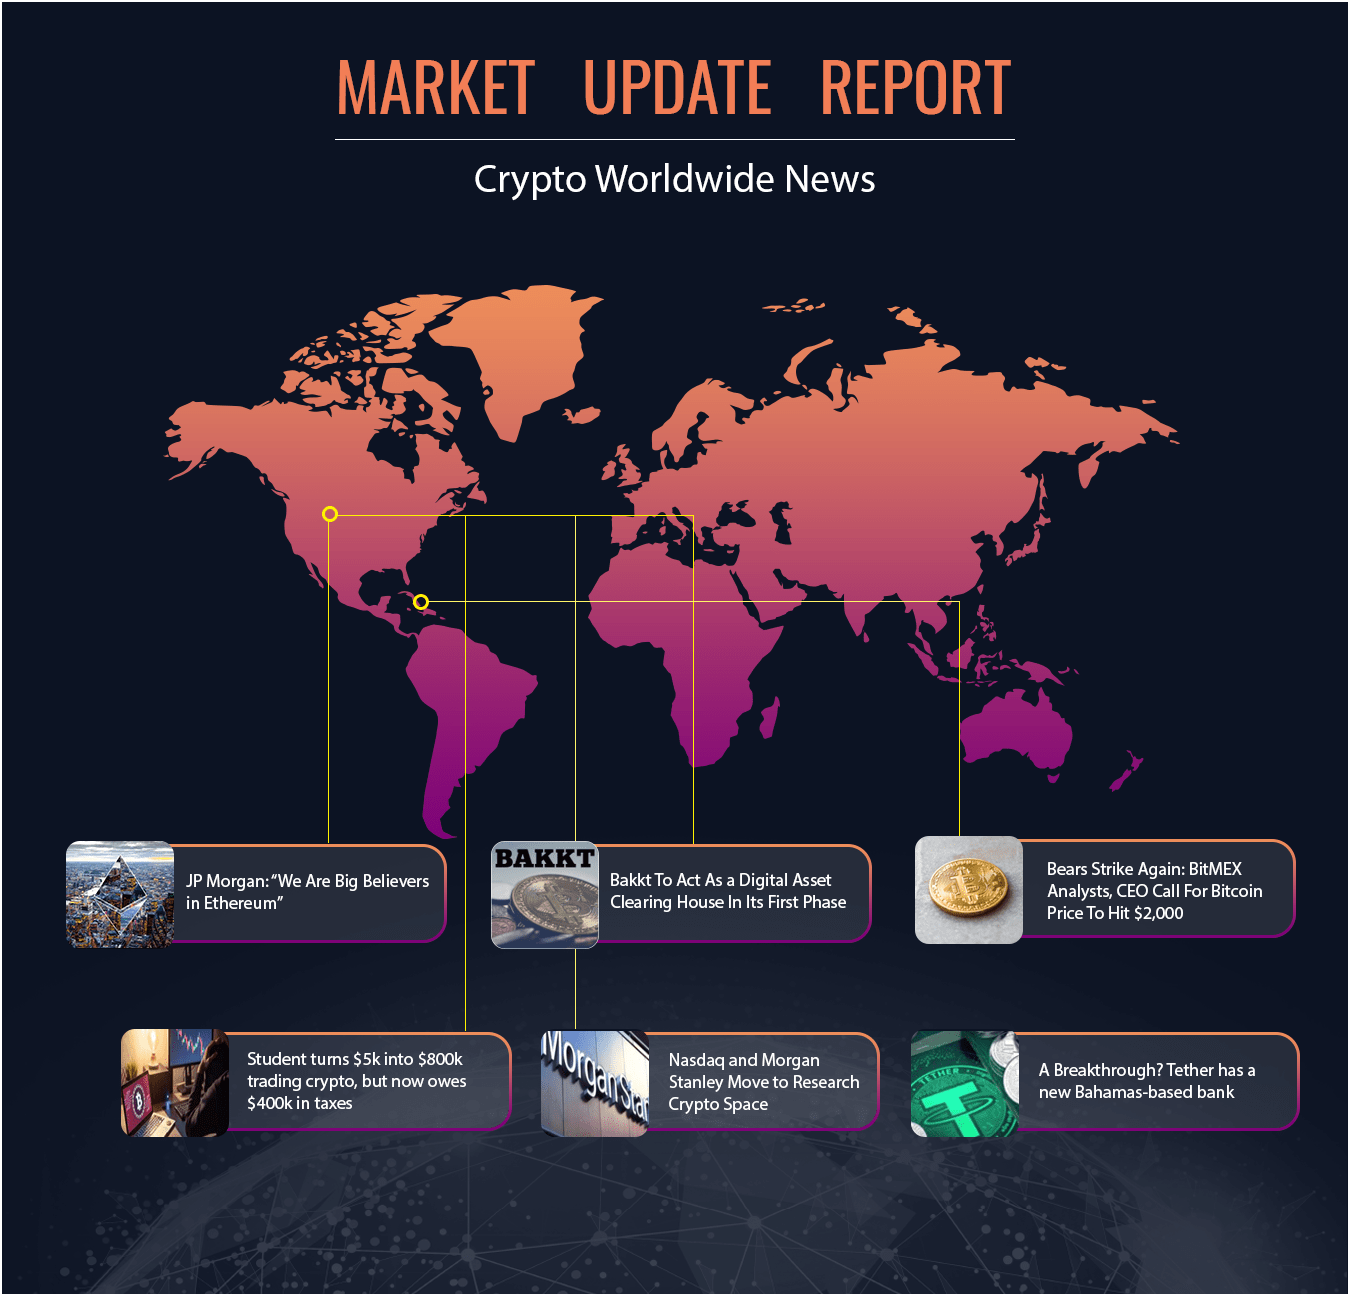 Market Update Report Nov.6: Bullish Days. Has The Market Sentiment Changed?